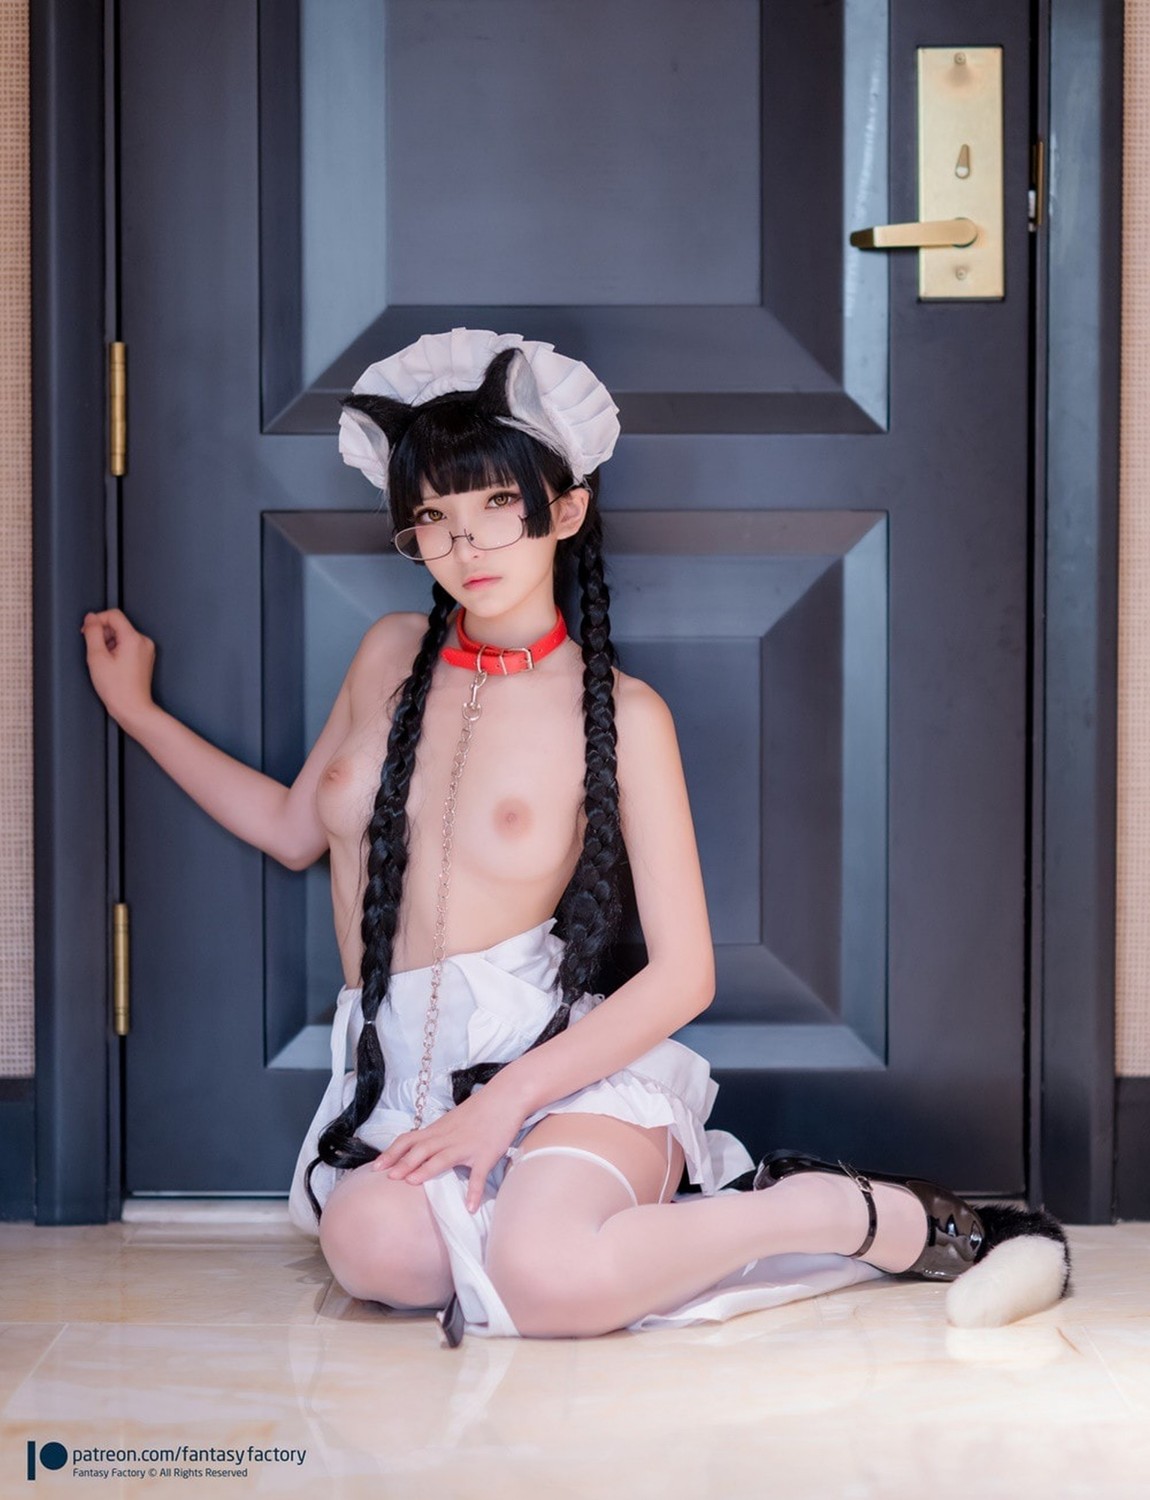 [網路收集系列] Sexy Neko Maid Cosplay